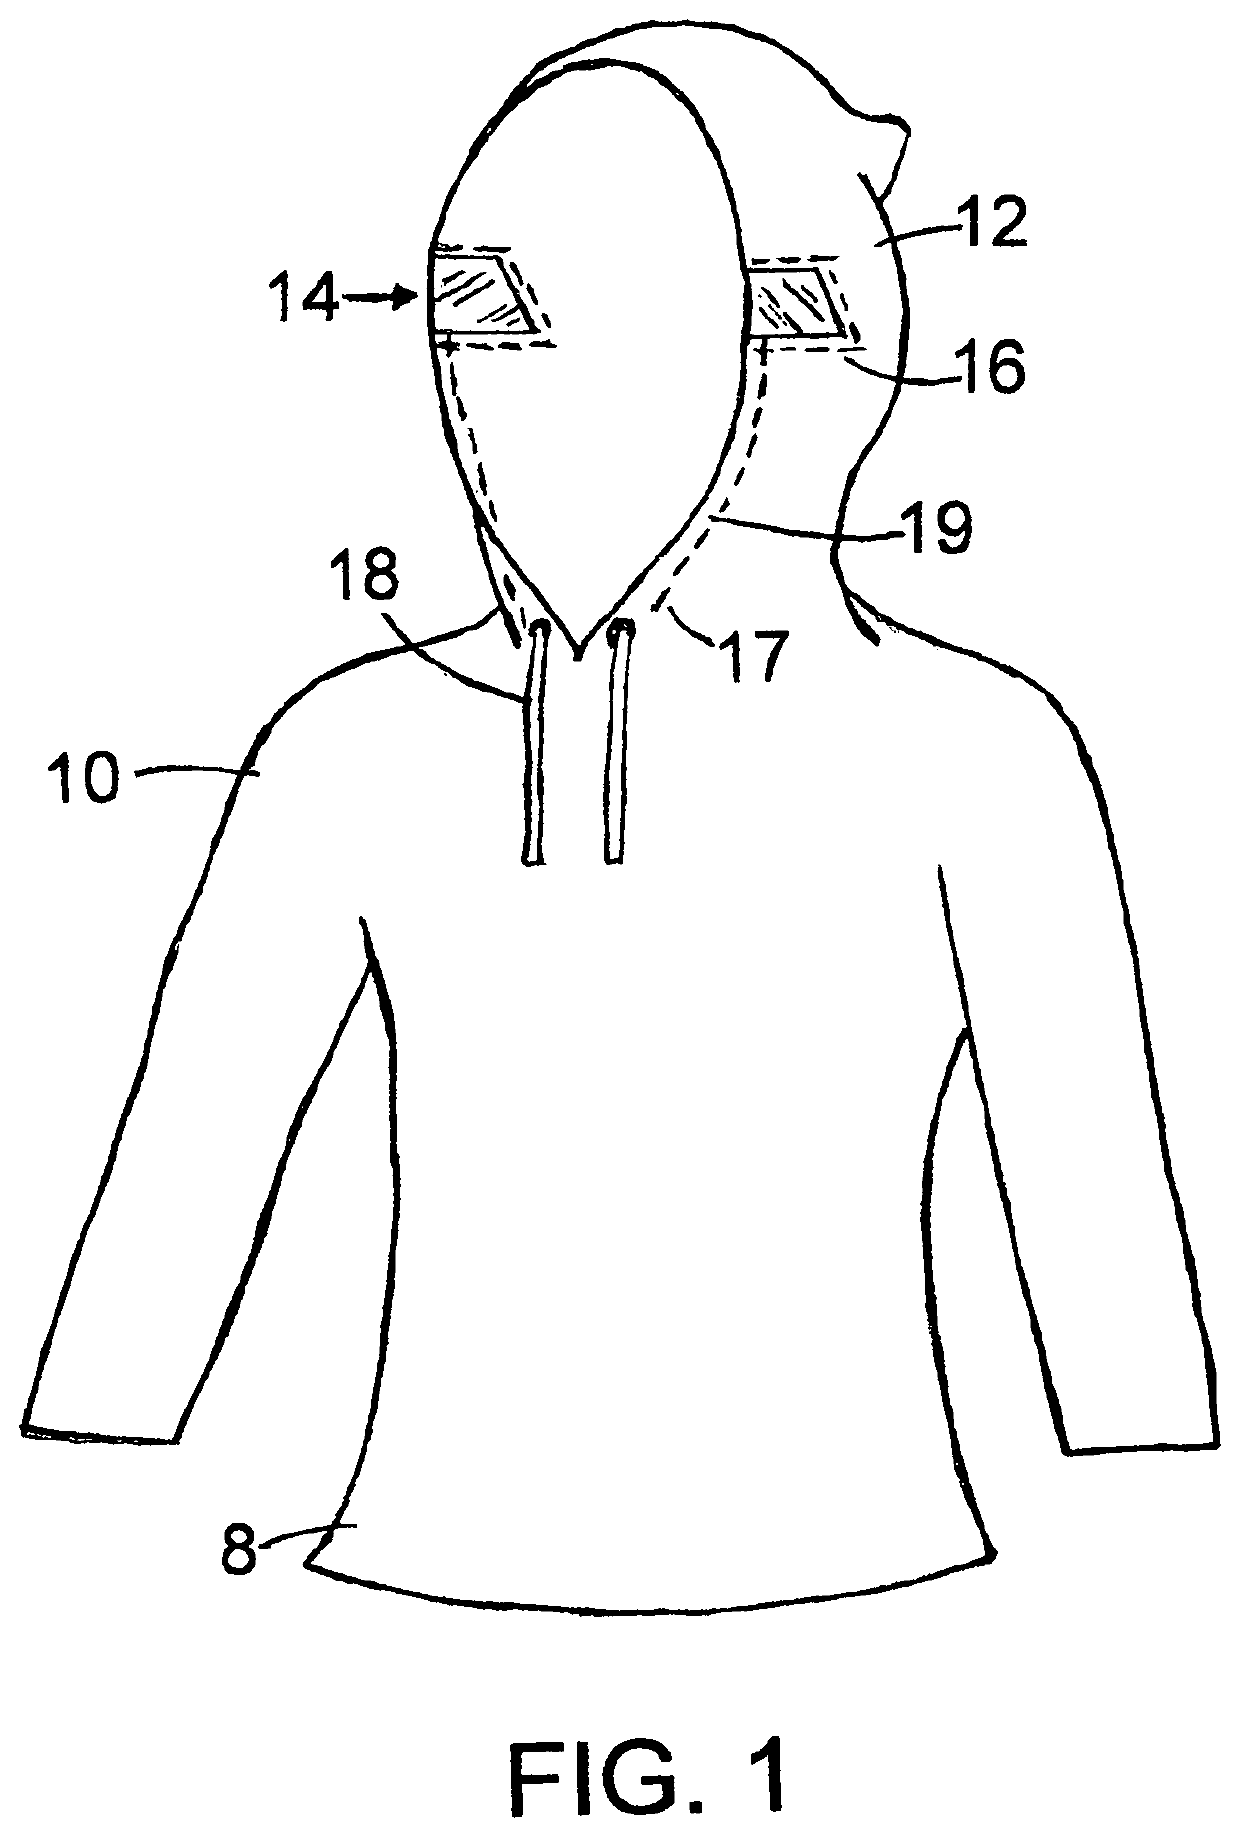 Peripheral vision hooded apparel